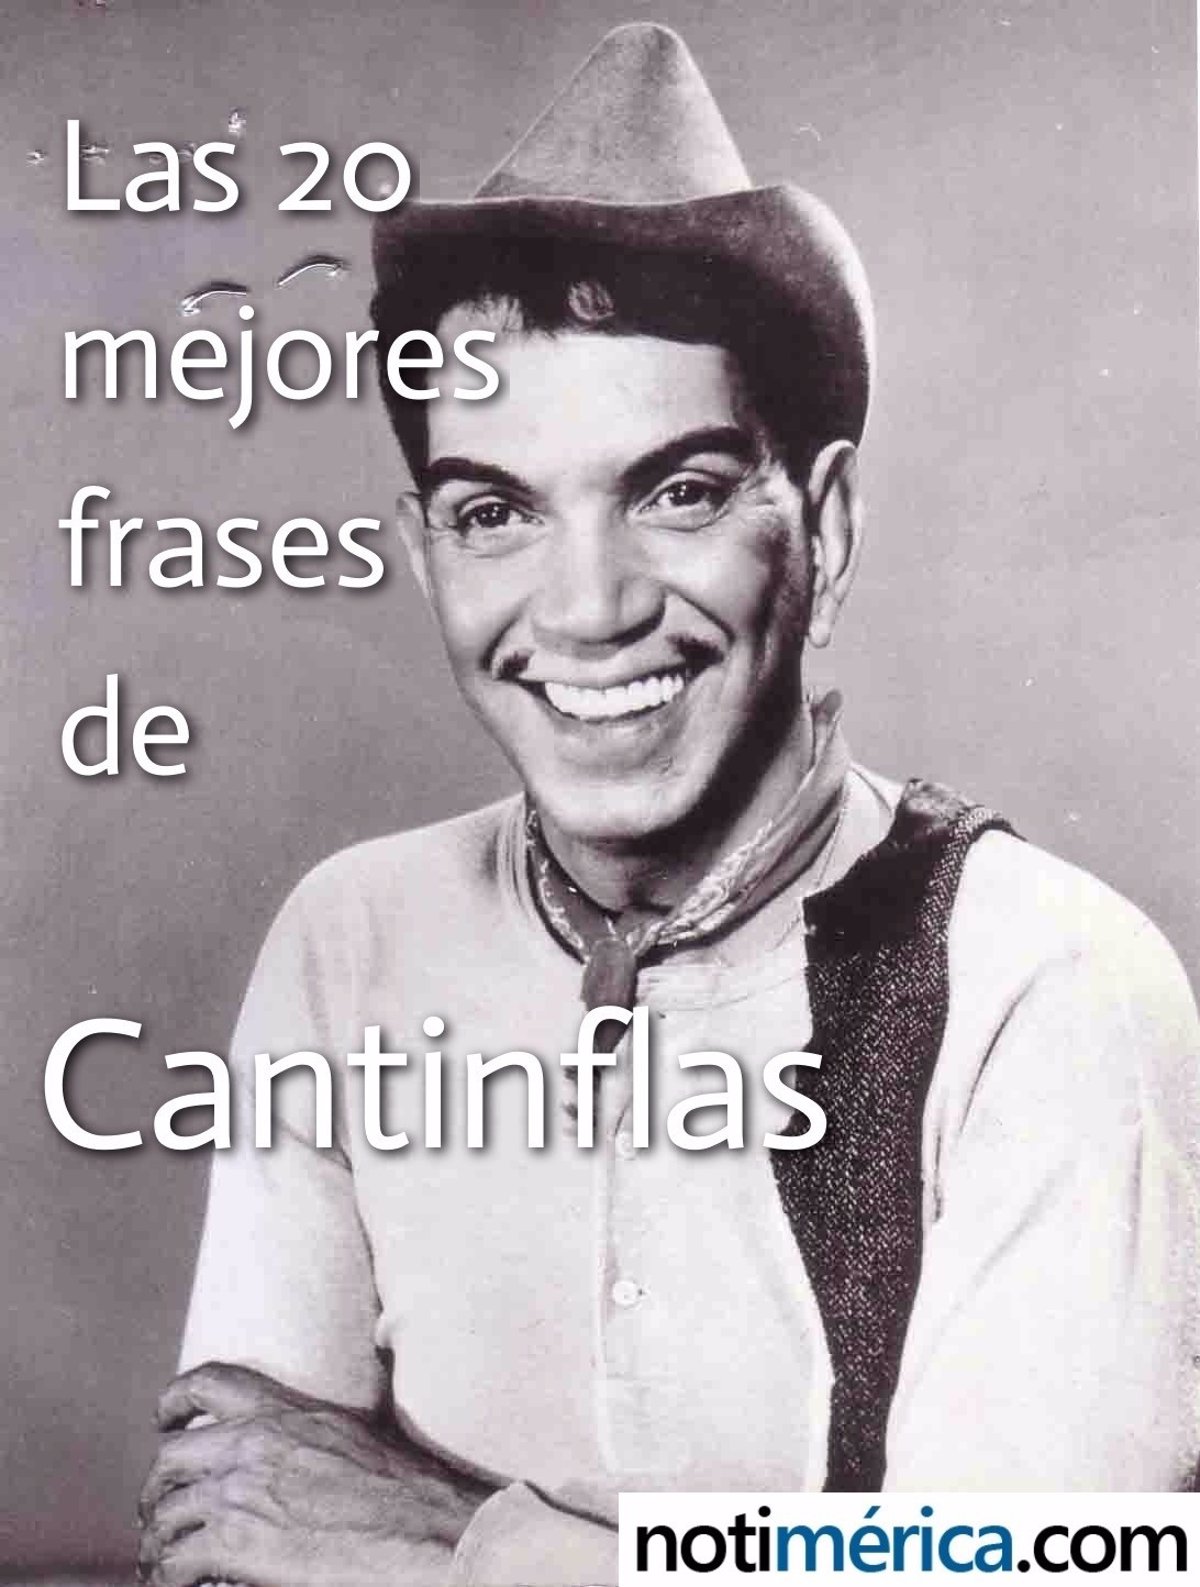 Las mejores frases de Cantinflas